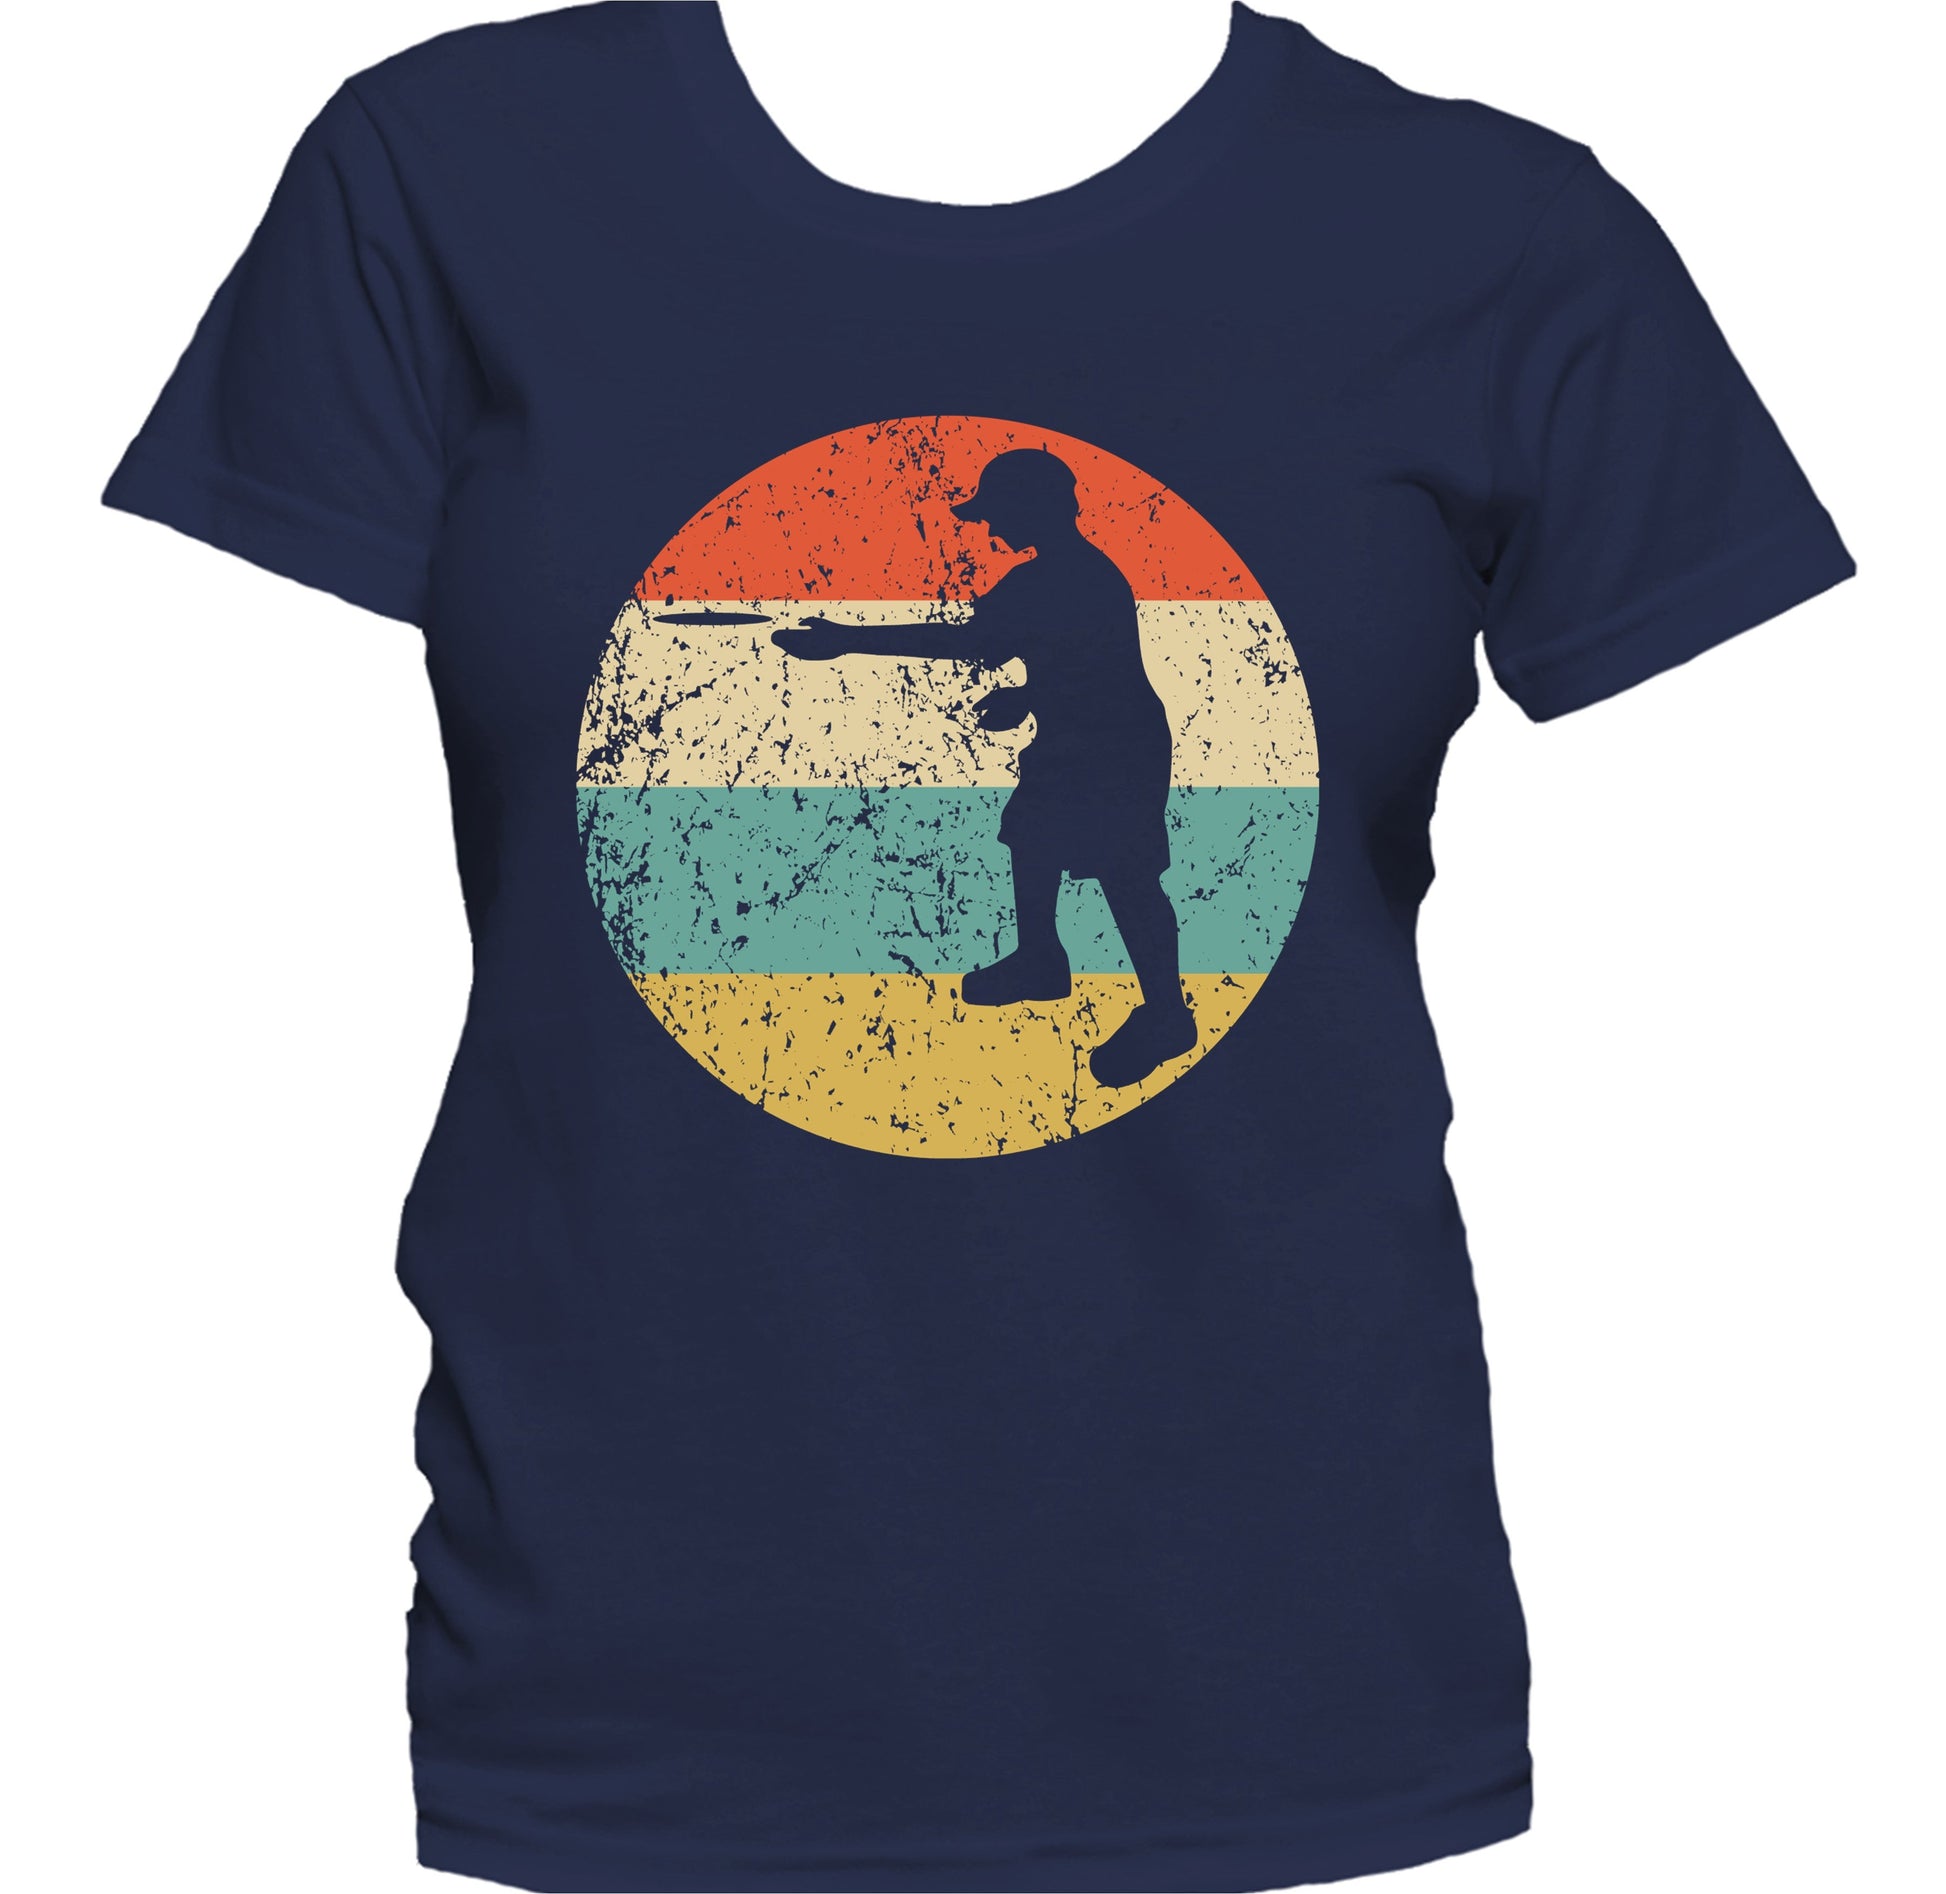 Disc Golf Player Silhouette Retro Sports Women's T-Shirt